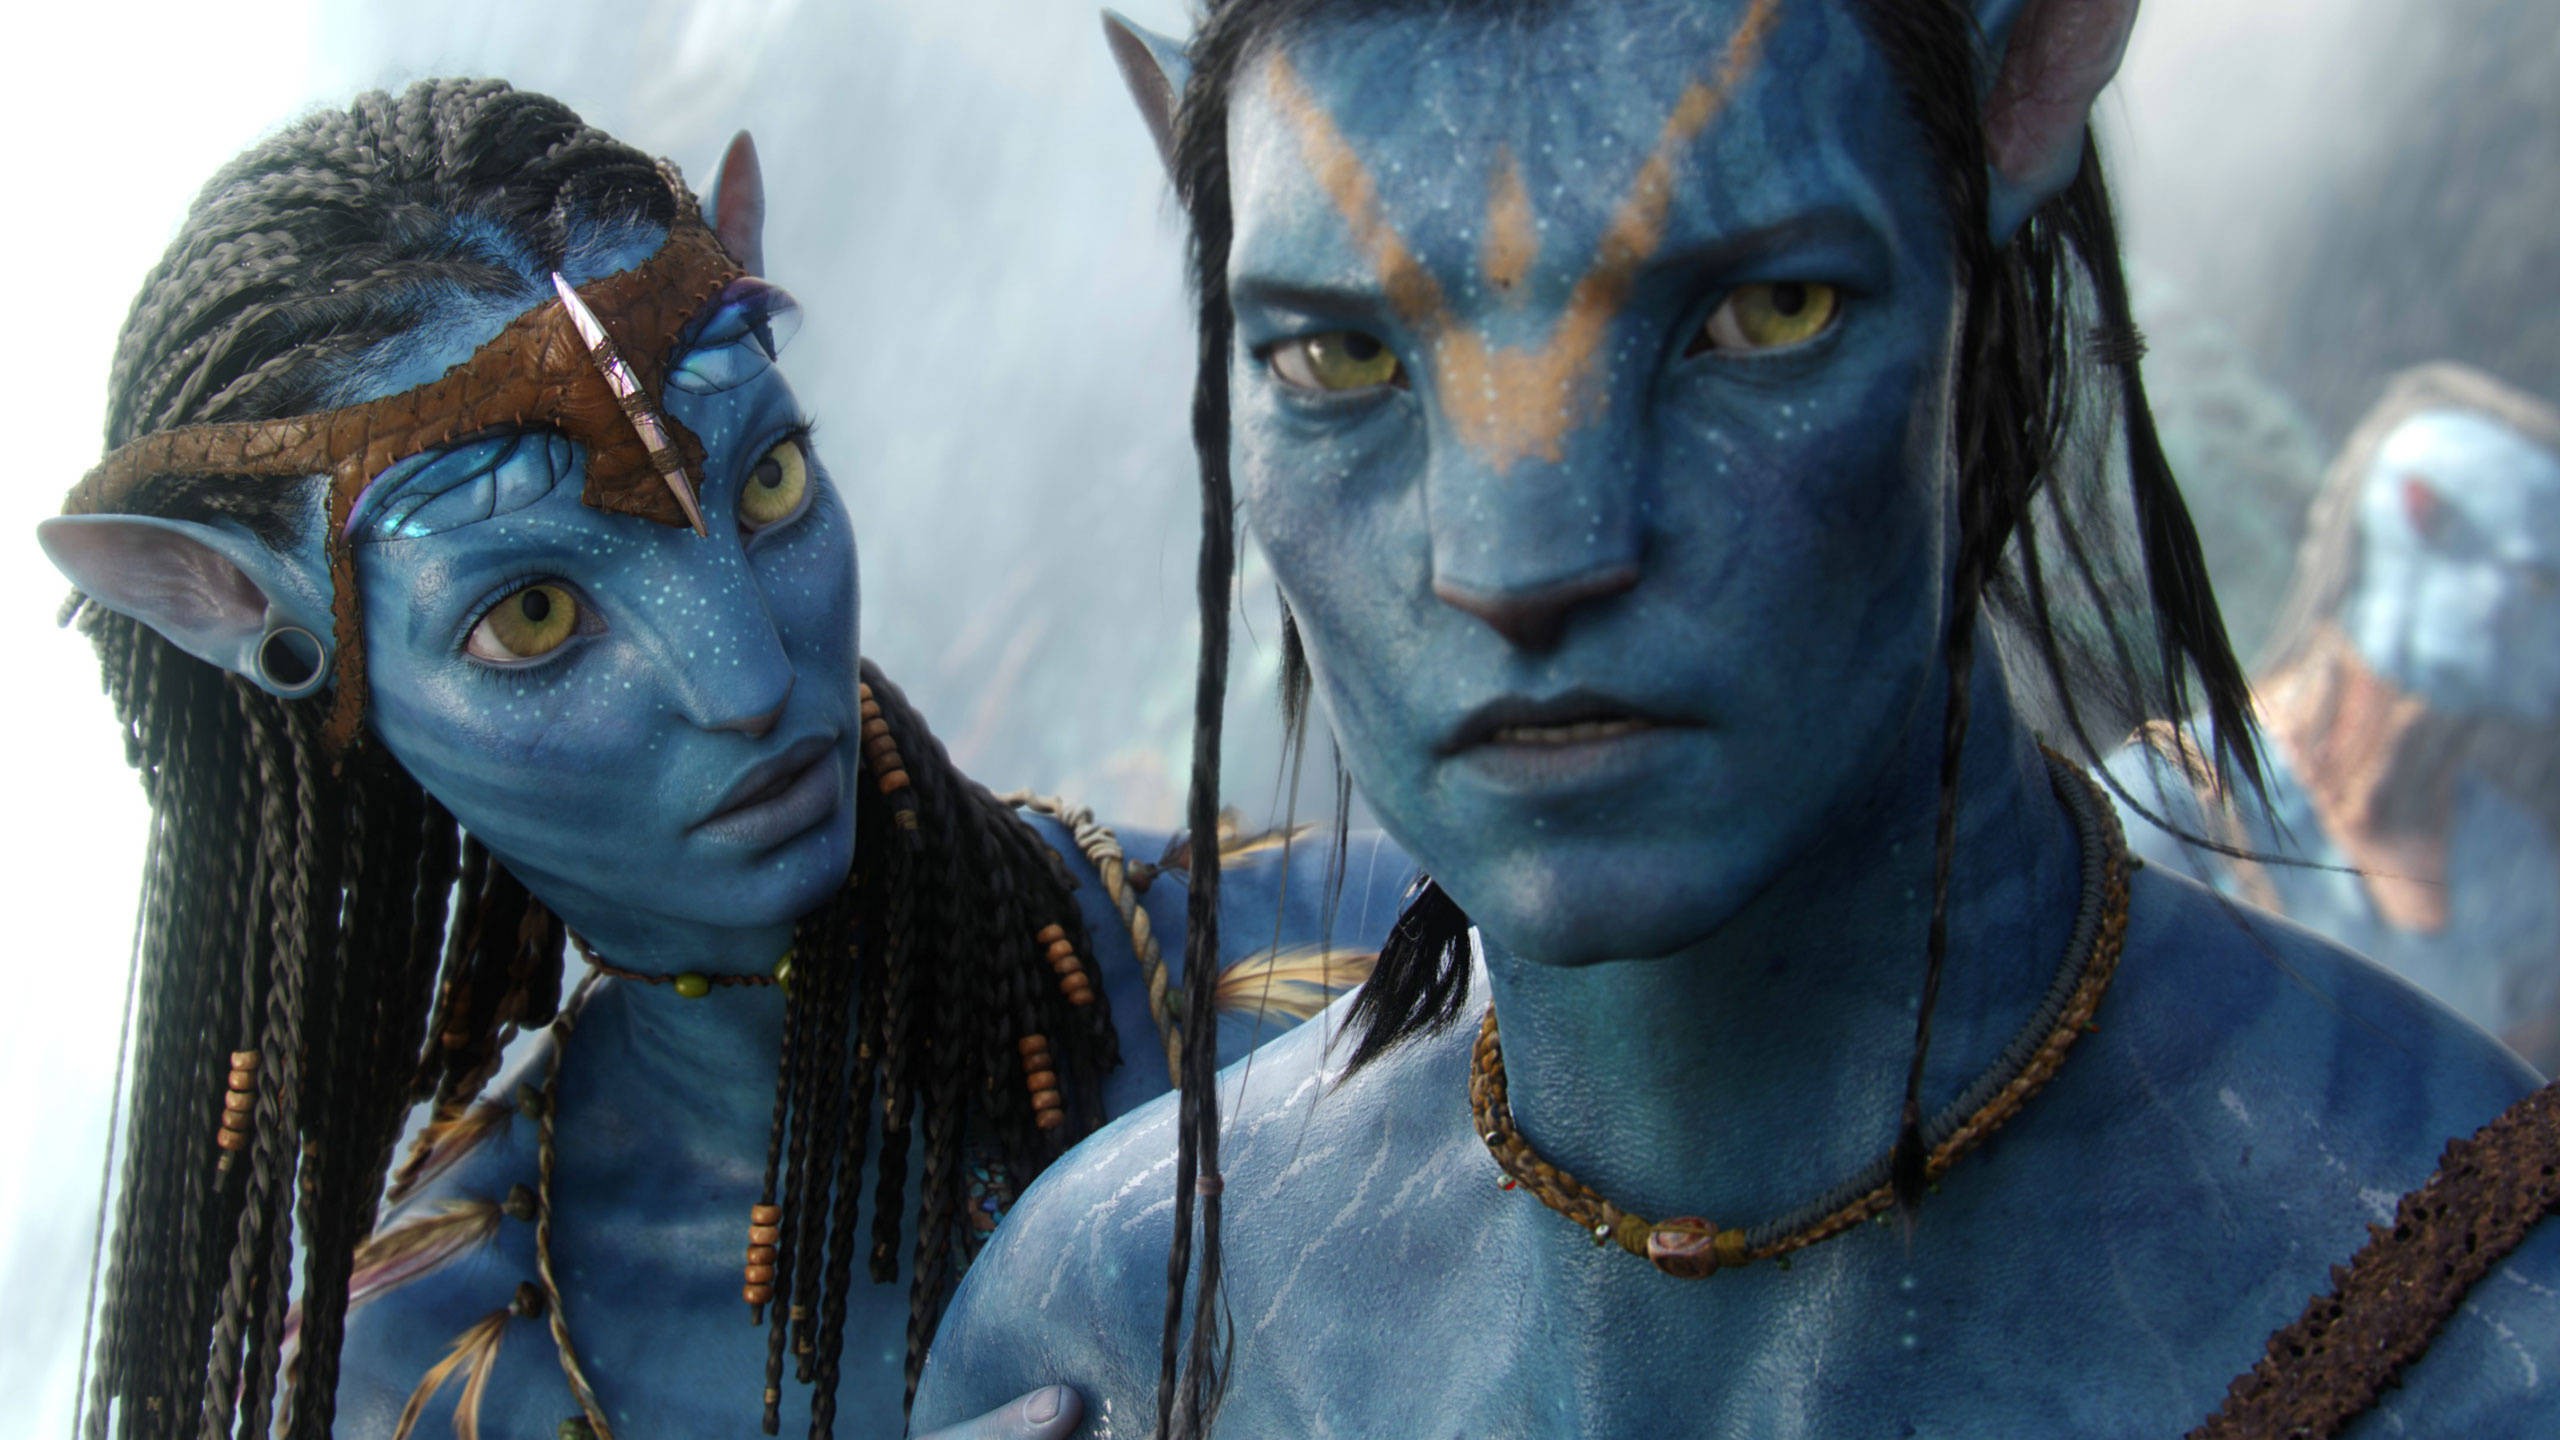 General 2560x1440 Avatar blue skin movies science fiction Neytiri Jake Sully Na'vi couple digital art film stills